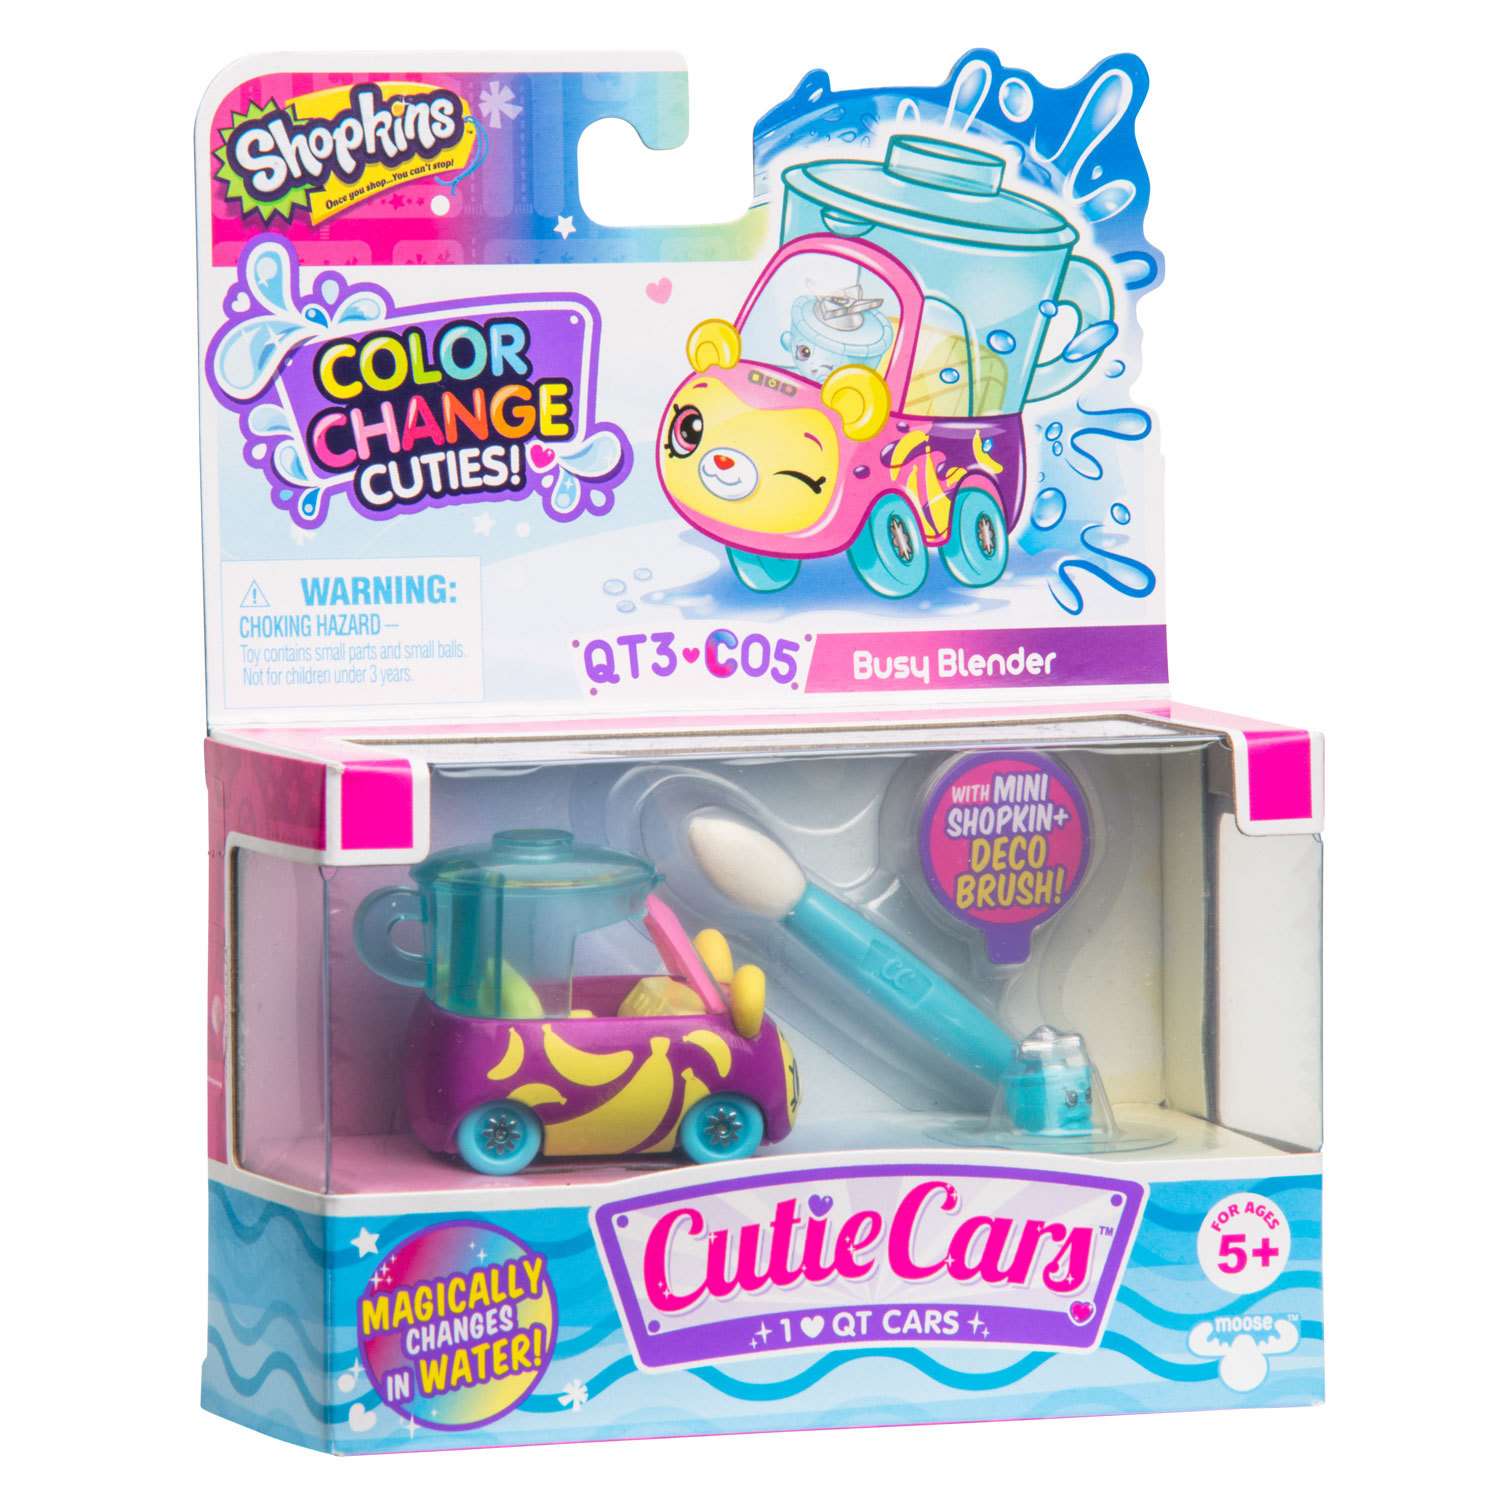 Машинка Cutie Cars Бизи Блендер меняющая цвет с кисточкой 57131 - фото 3